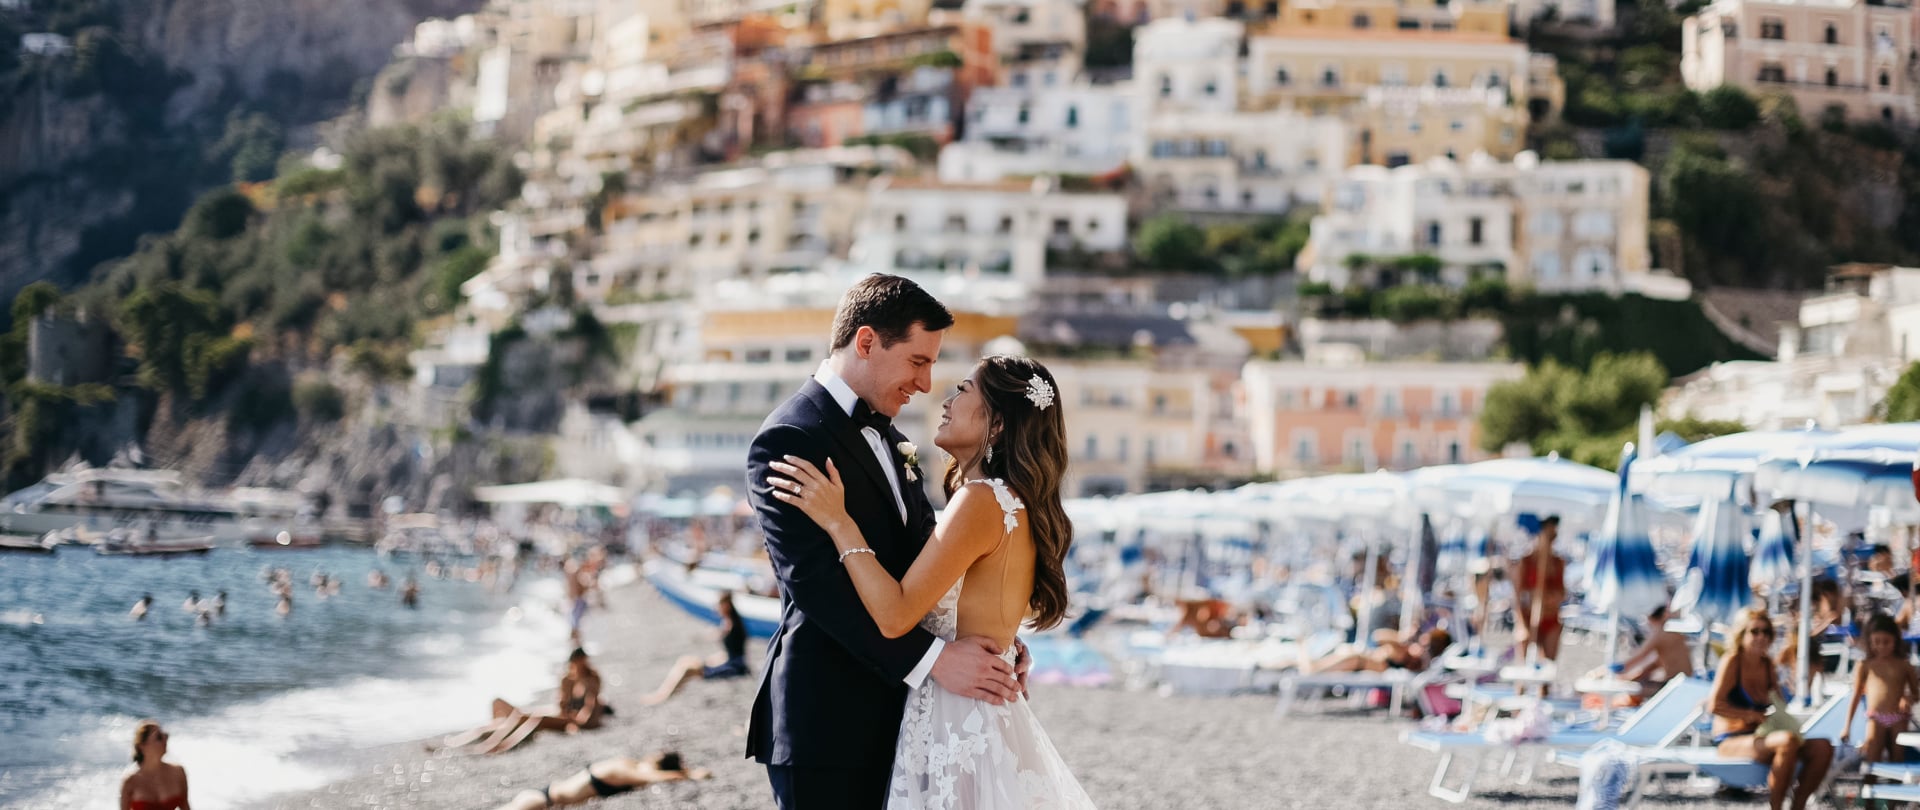 Christine & Ryan Wedding Video Filmed at Positano, Italy